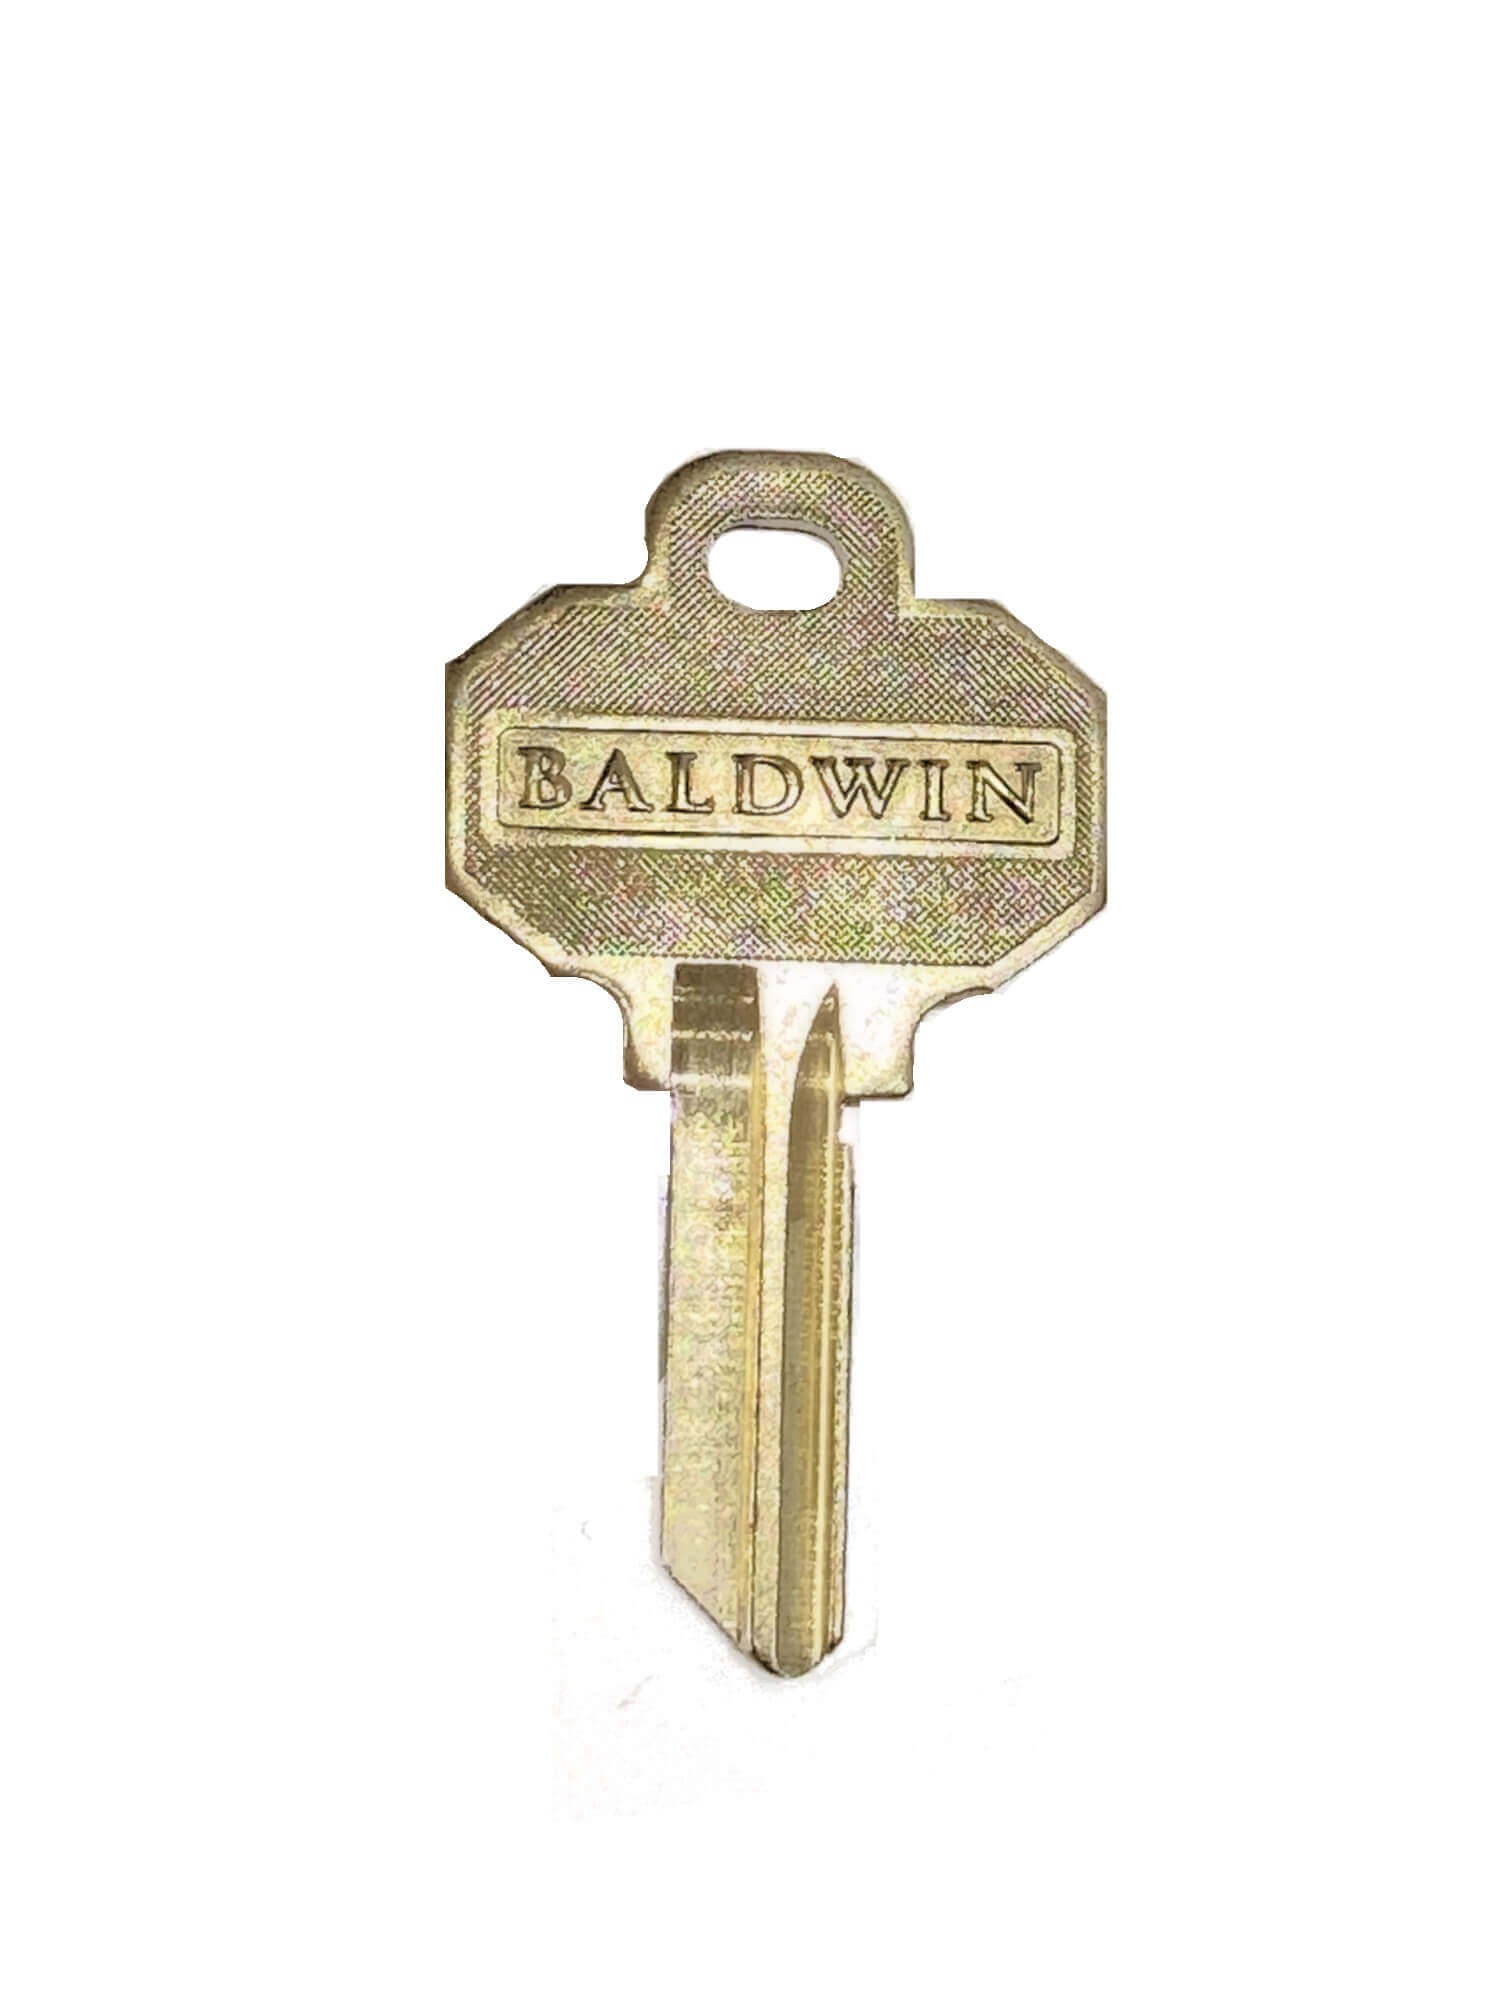 50 BALDWIN 5 Pin Key Blanks Model Number BAL8335152 03 stamped on Key Blank 